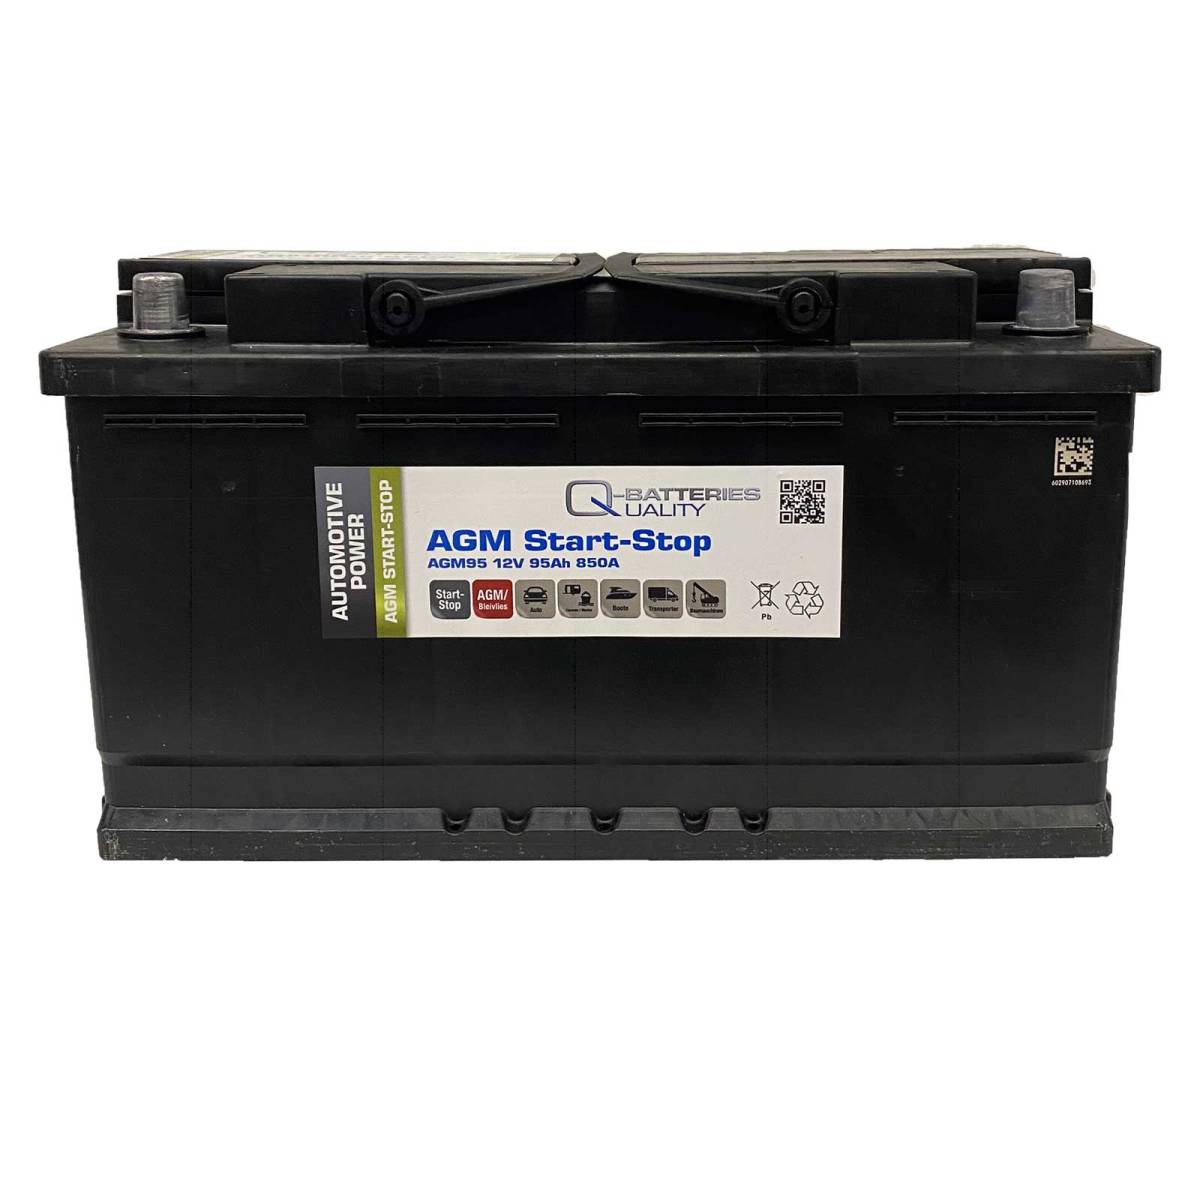 Q-Batteries Start-Stop Autobatterie AGM95 12V 95Ah 850A, Starterbatterie, Boot, Batterien für